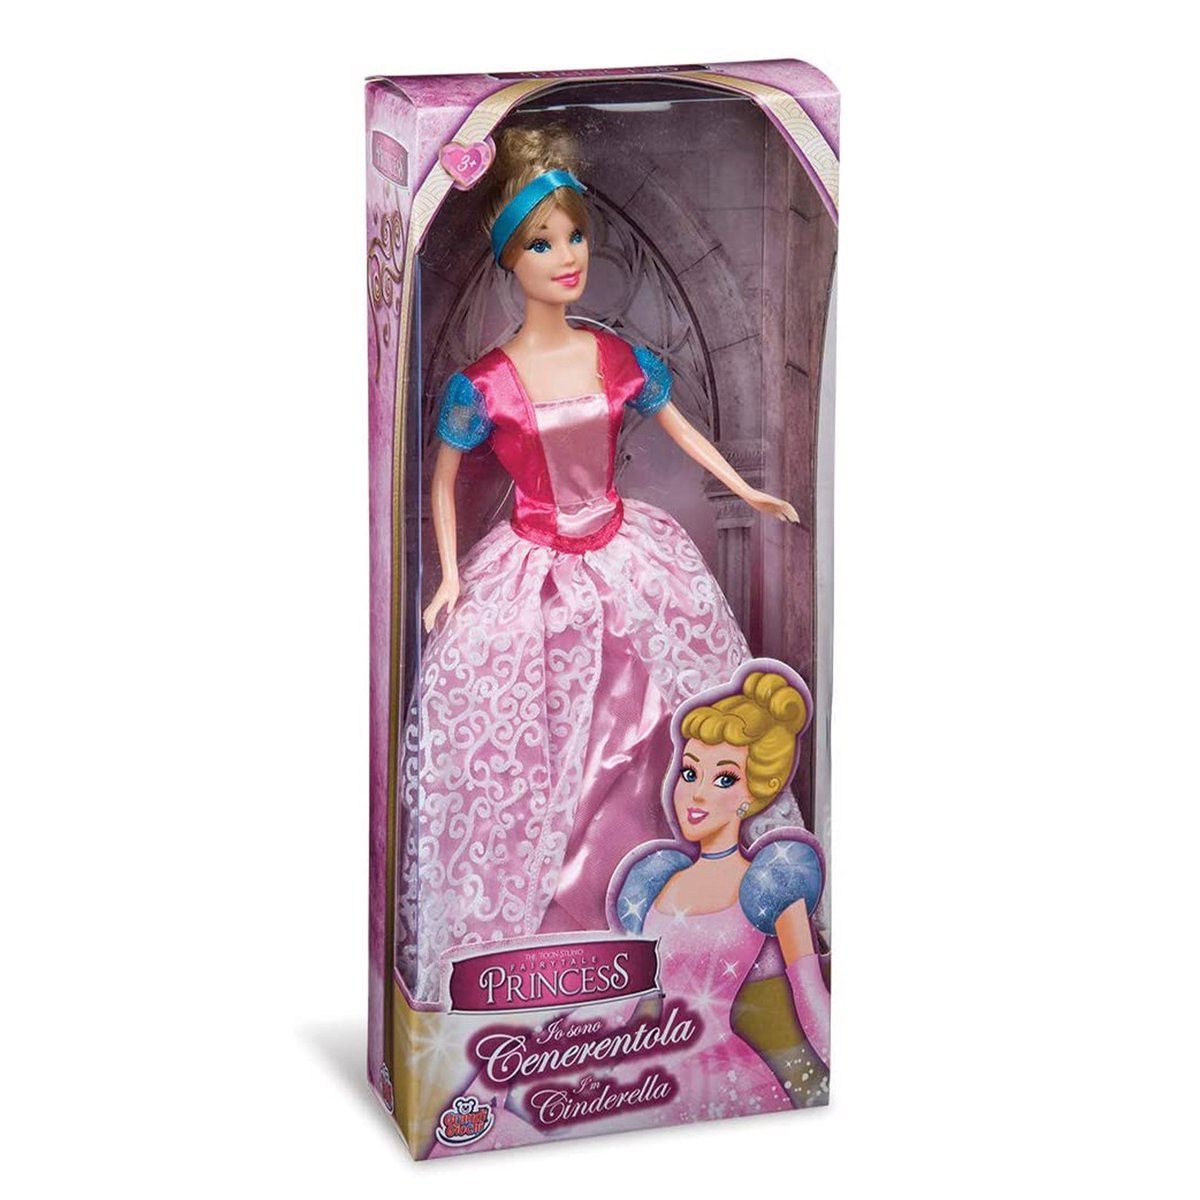 Princess Fashion Doll Cinderella GG02901